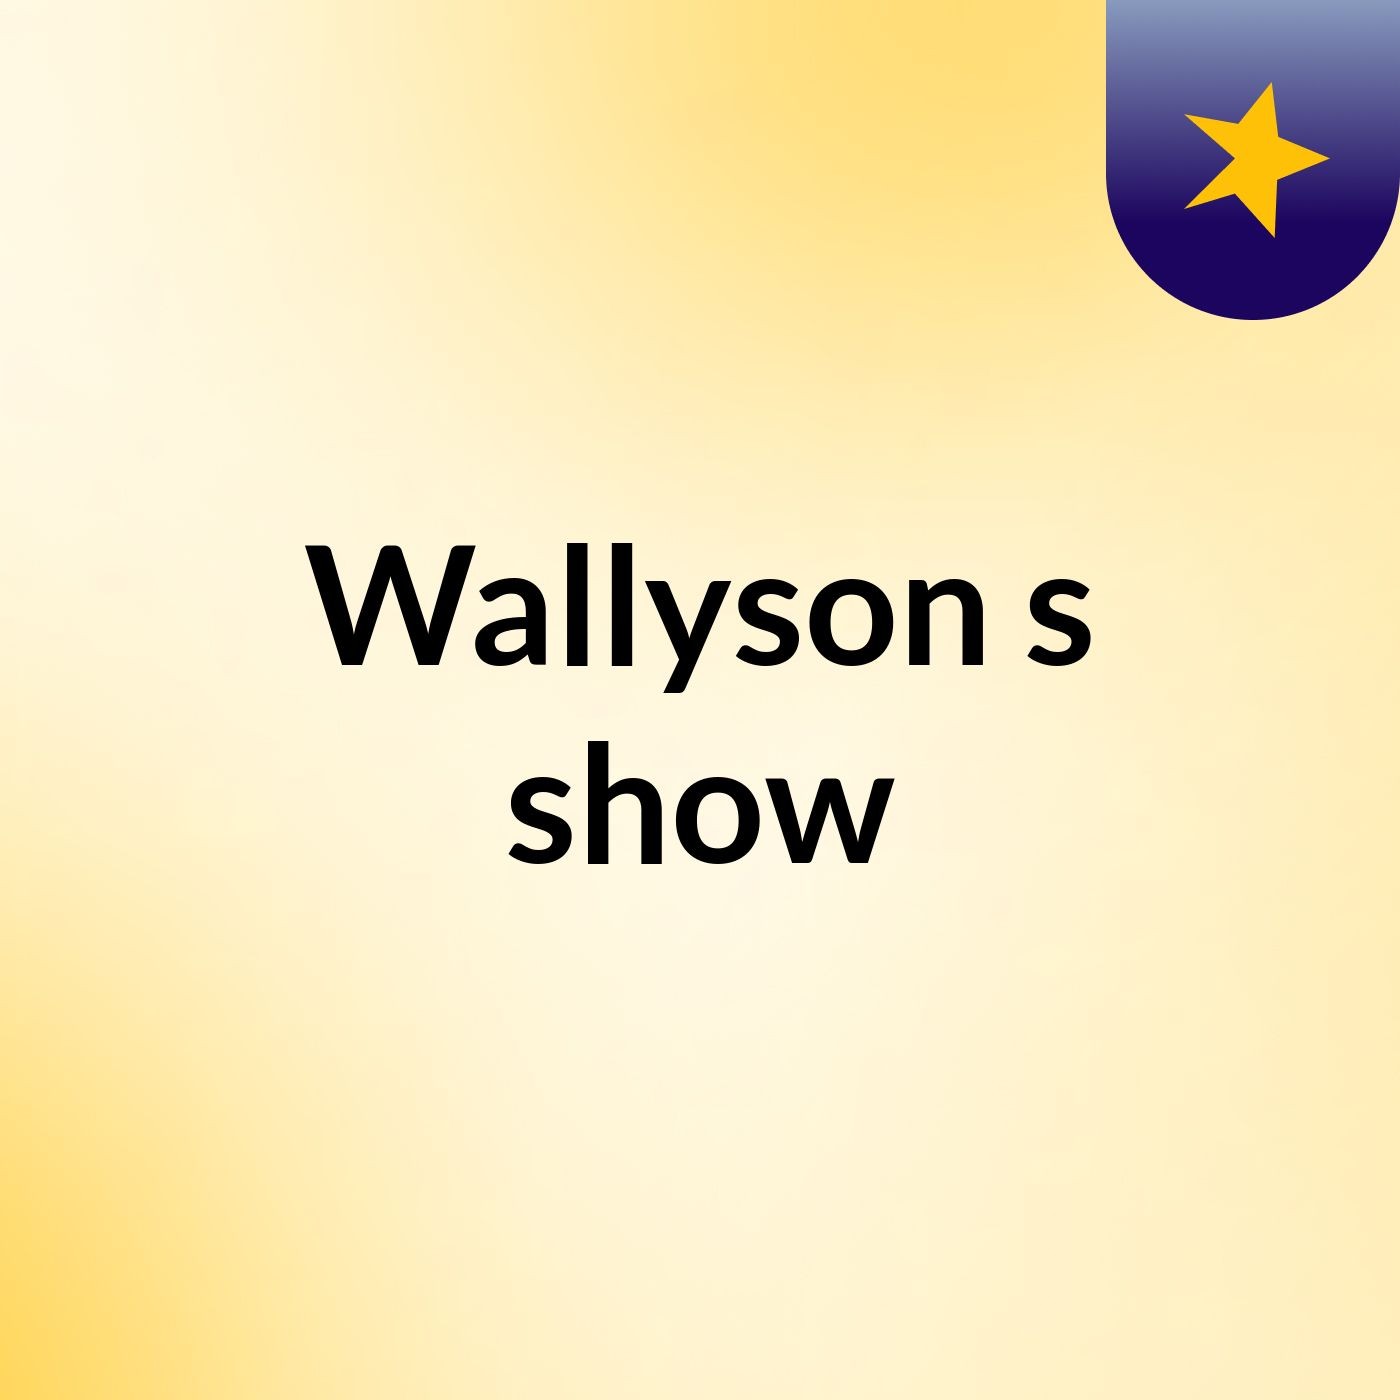 Wallyson's show